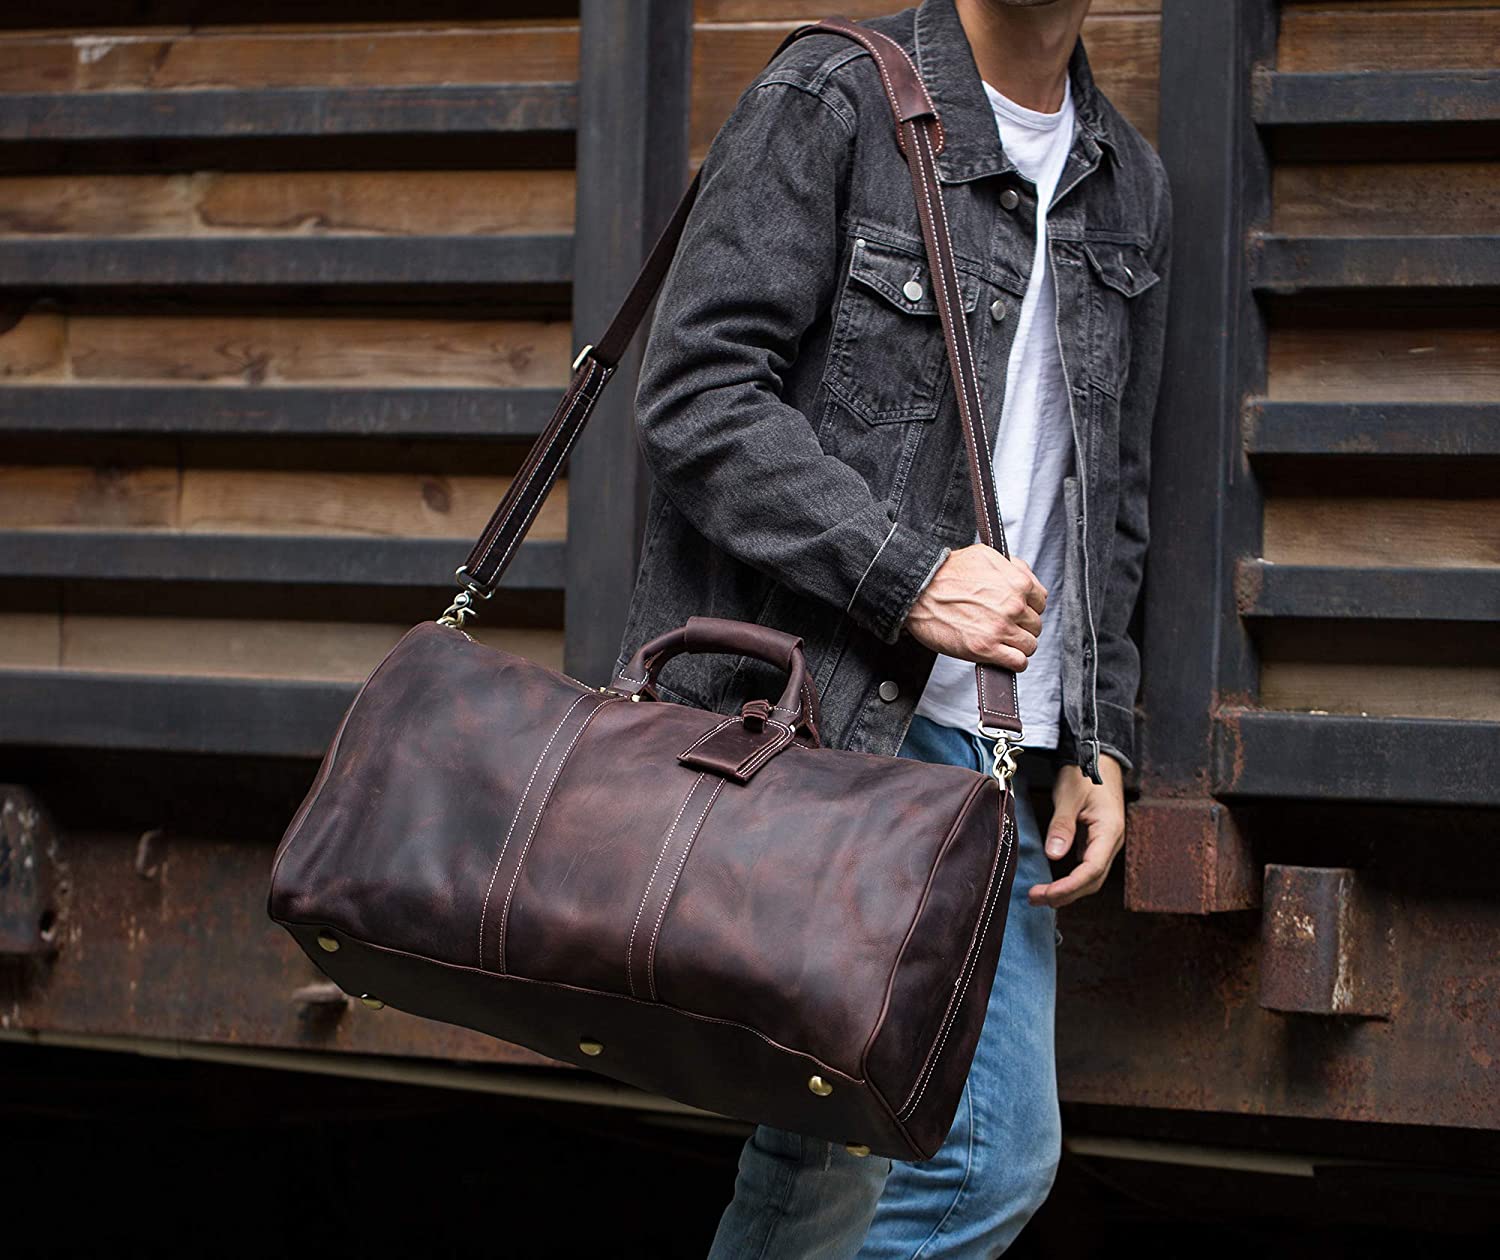 Polare 23'' Classic Full Grain Leather Travel Duffel Weekender Bag  Overnight Duffle Bag For Men